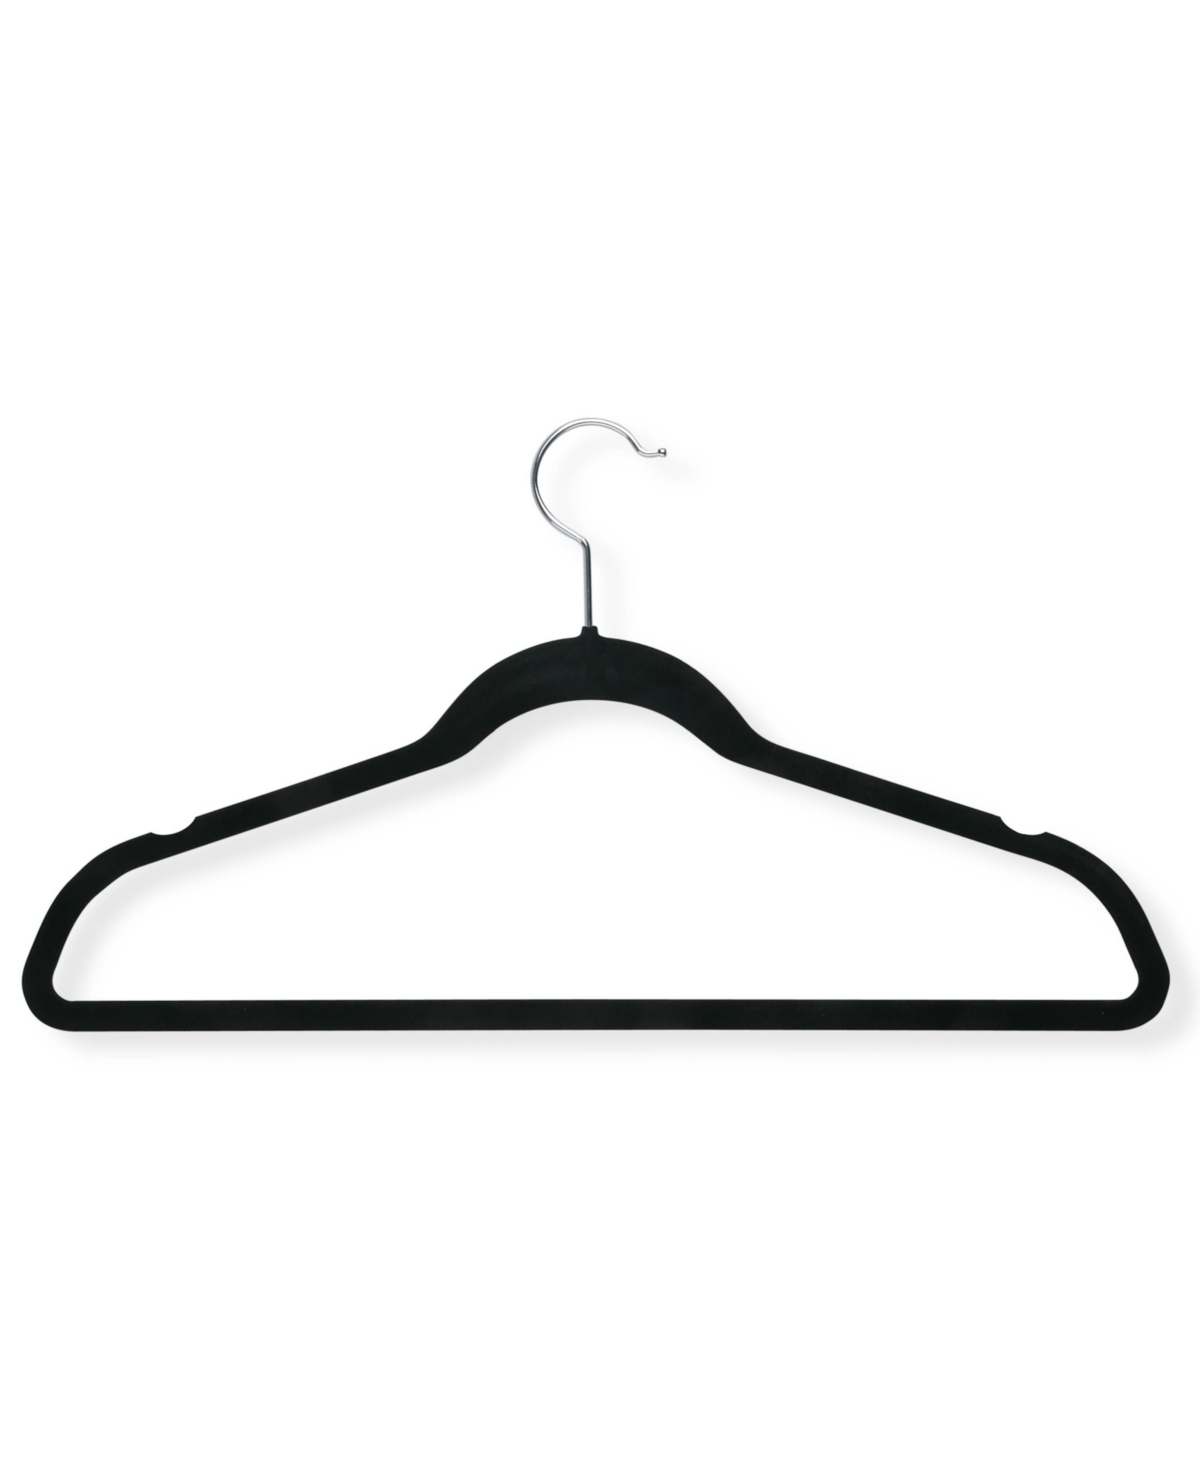 Slim-Profile Non-Slip Velvet Hangers Set, 20 Pieces - Black